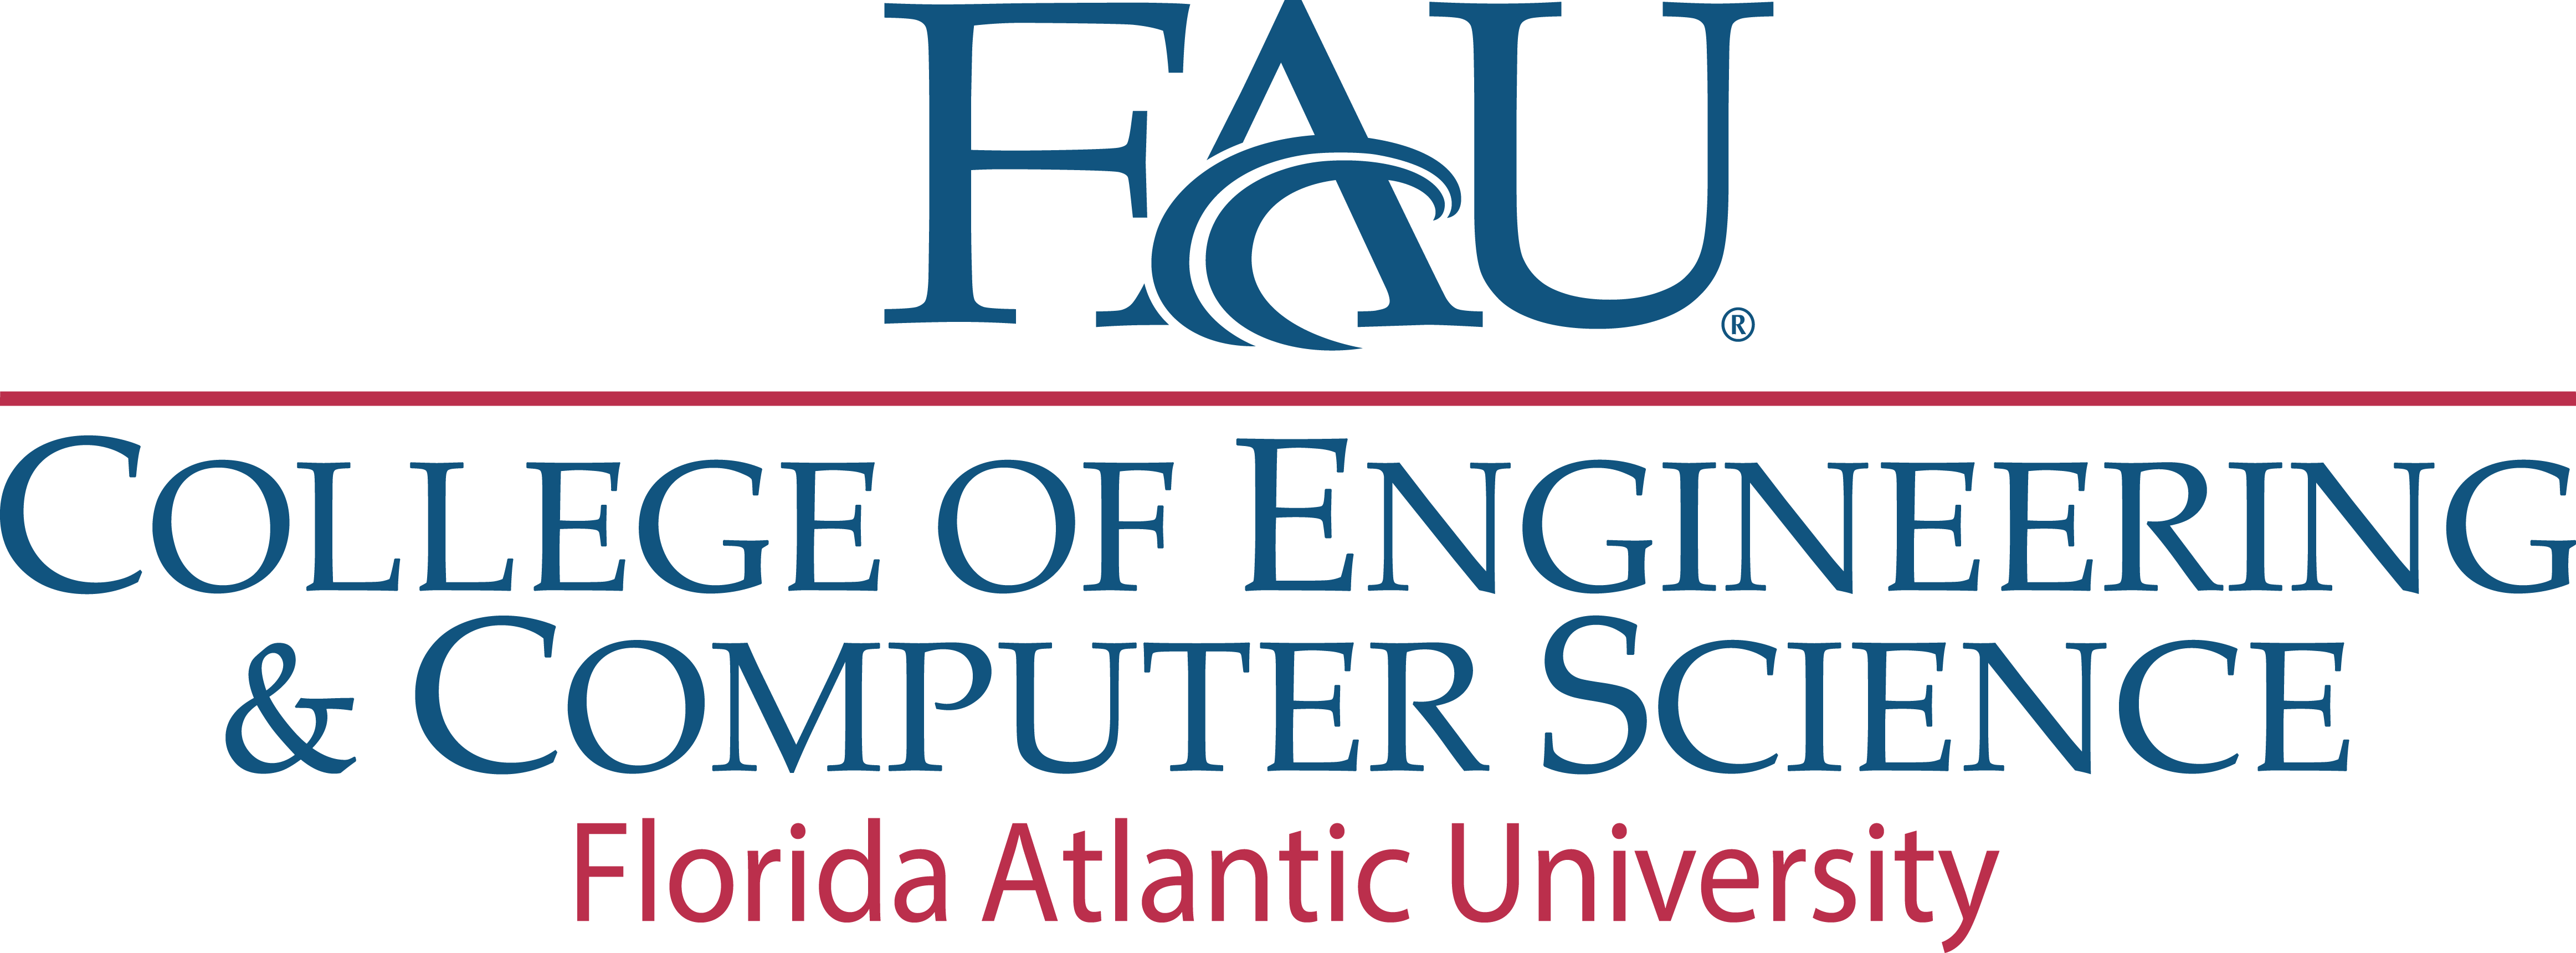 Florida Atlantic University Introduction to Programming Bootcamp logo